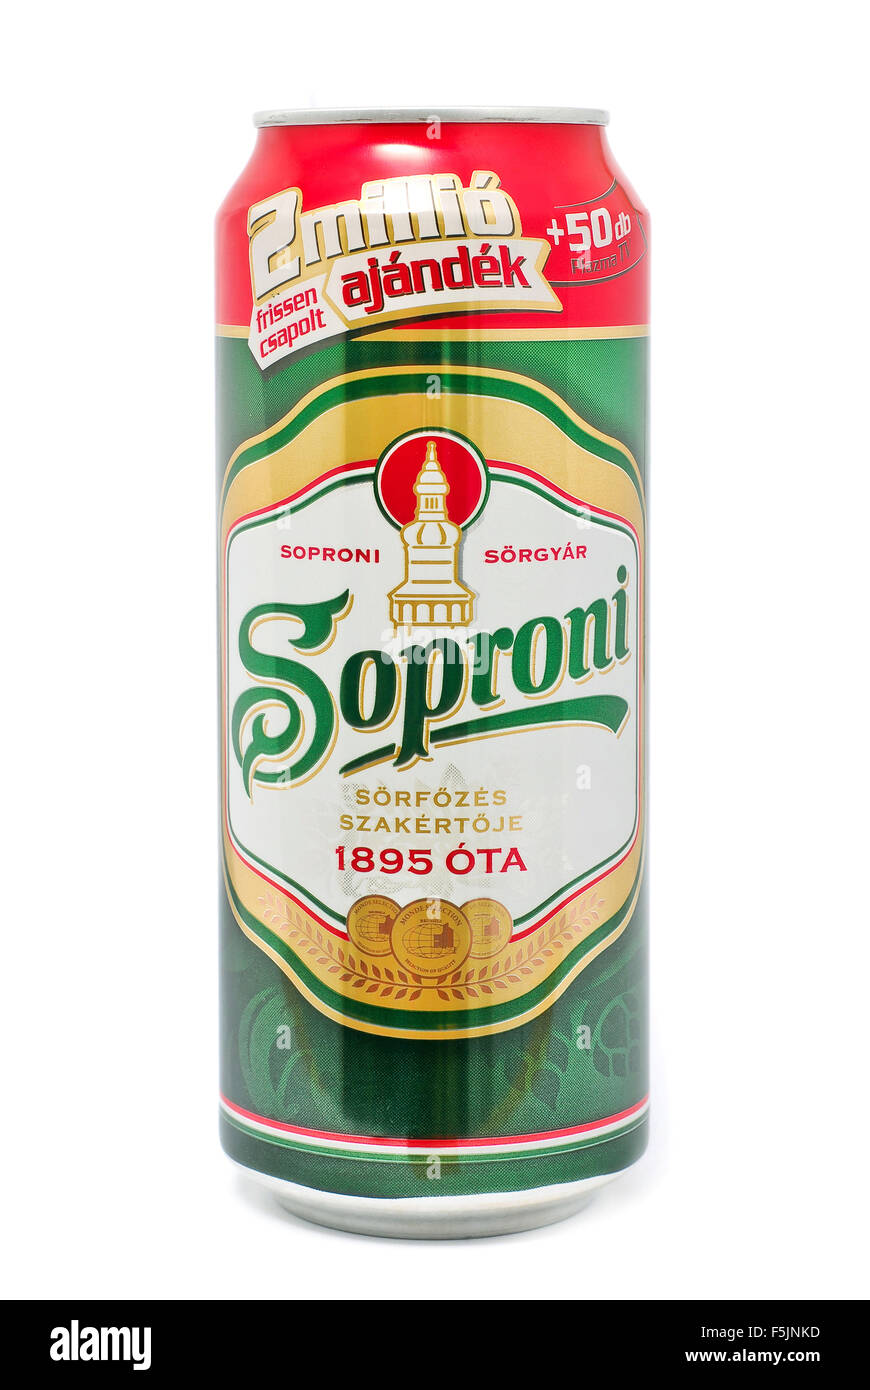 soproni beer can Stock Photo - Alamy